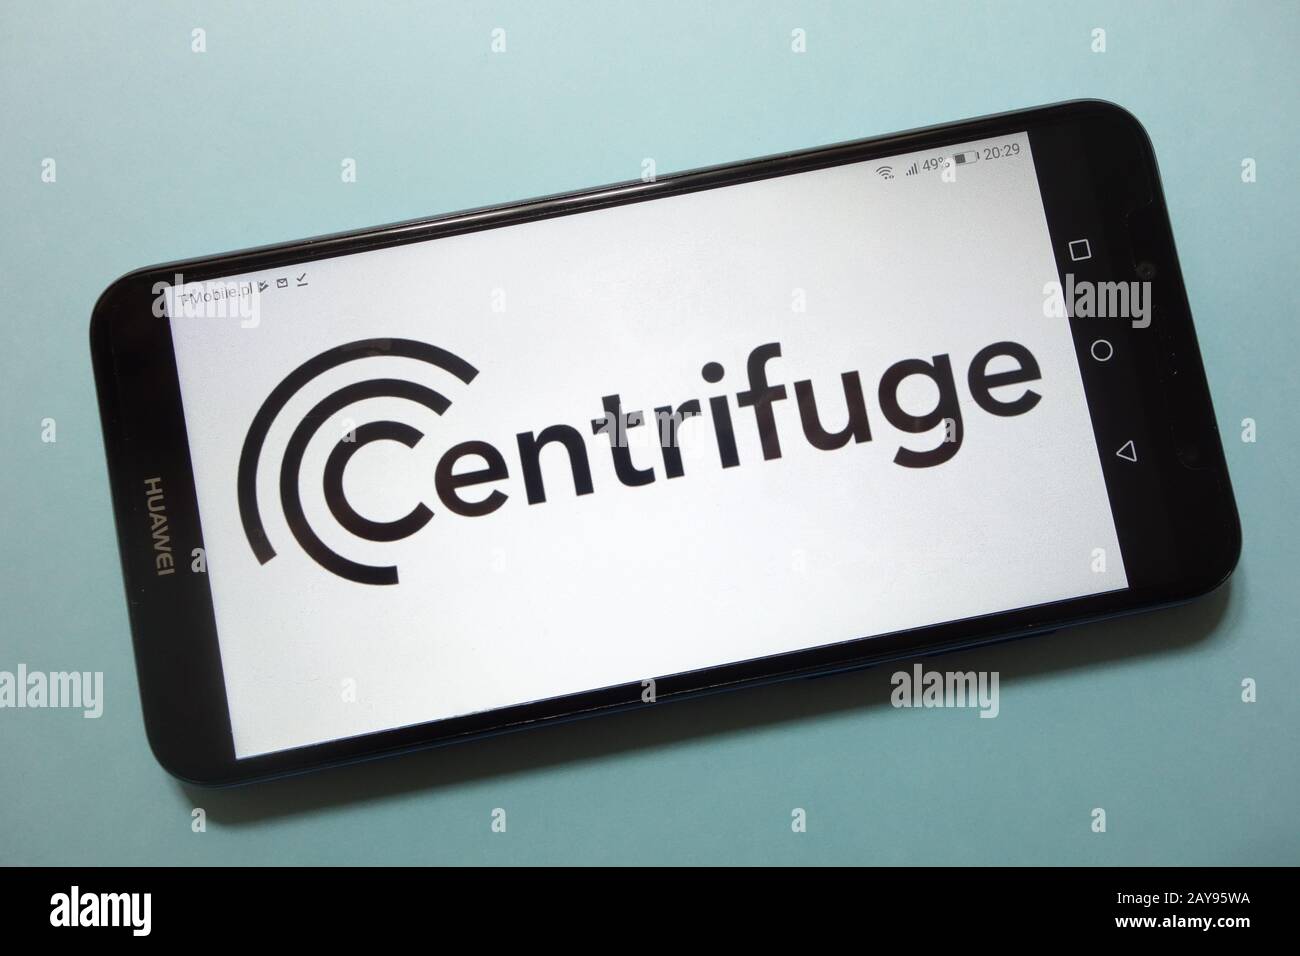 Centrifuge cryptocurrency logo displayed on smartphone Stock Photo